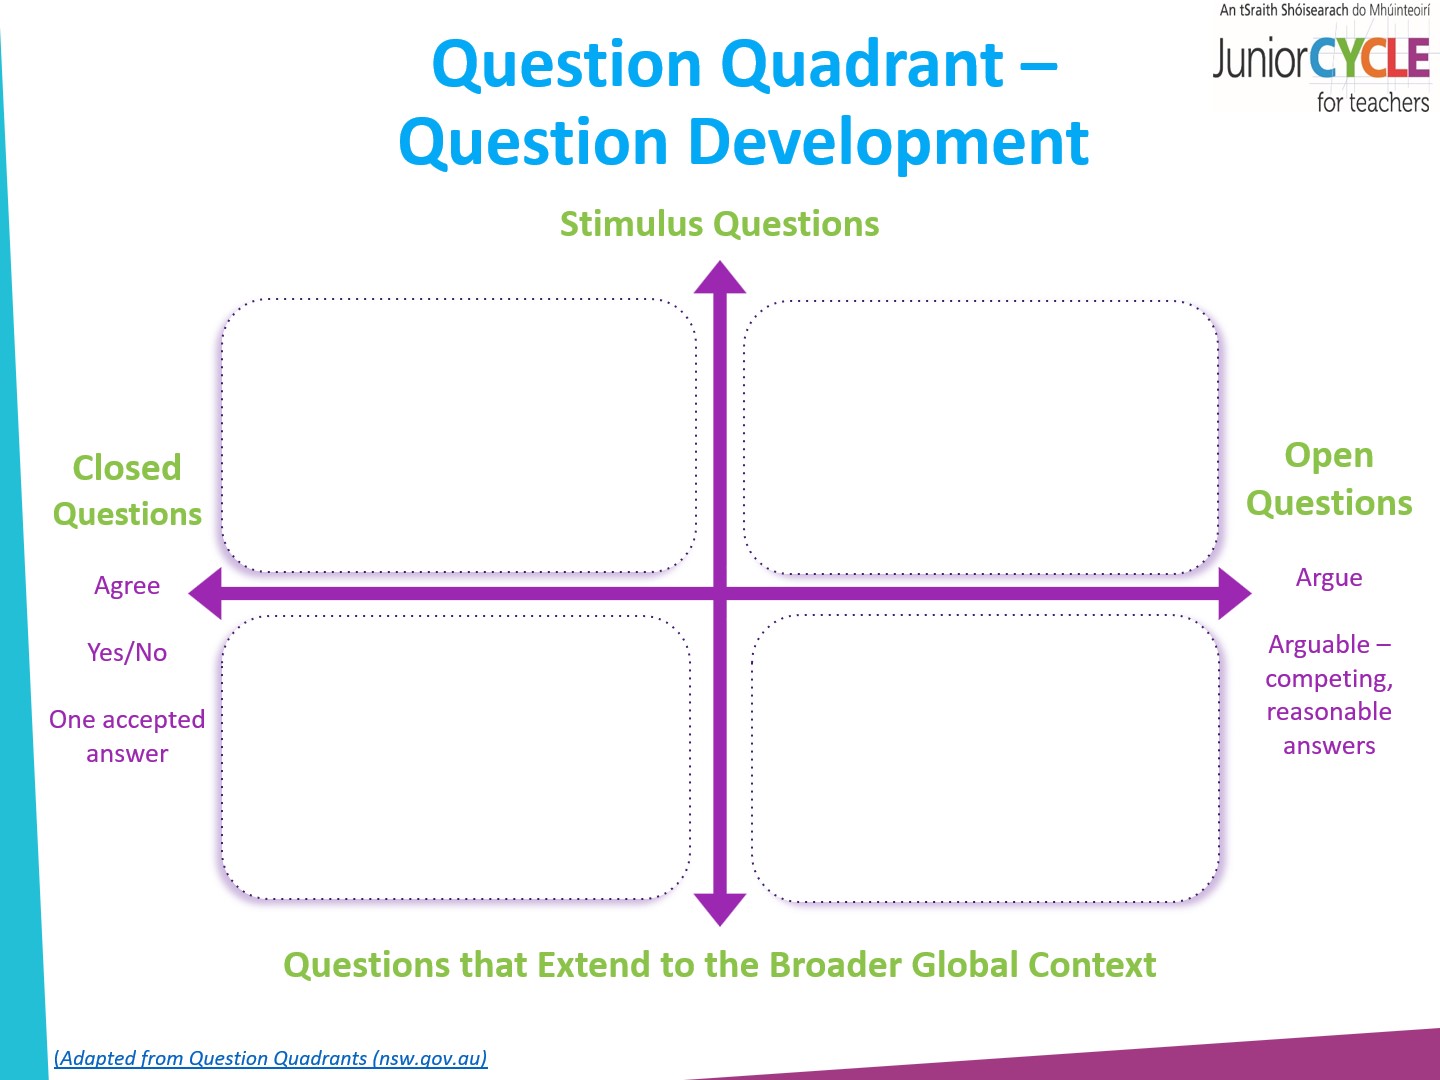 Question Quadrant Template - Microsoft PowerPoint